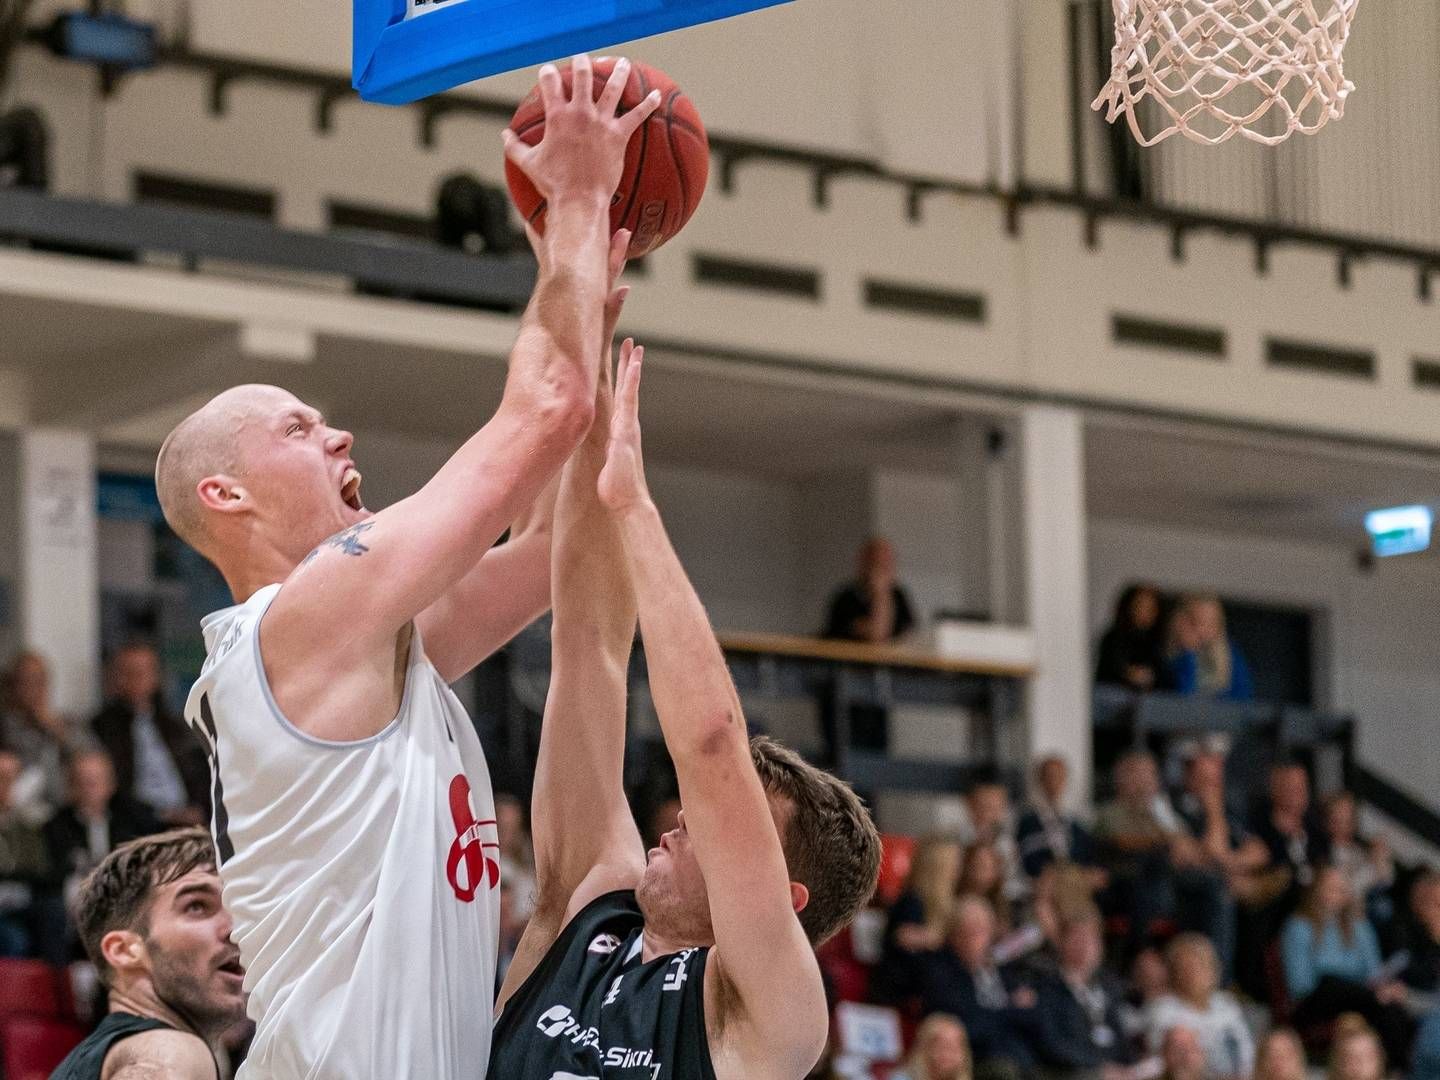 Foto: Dansk Basketball Forbund